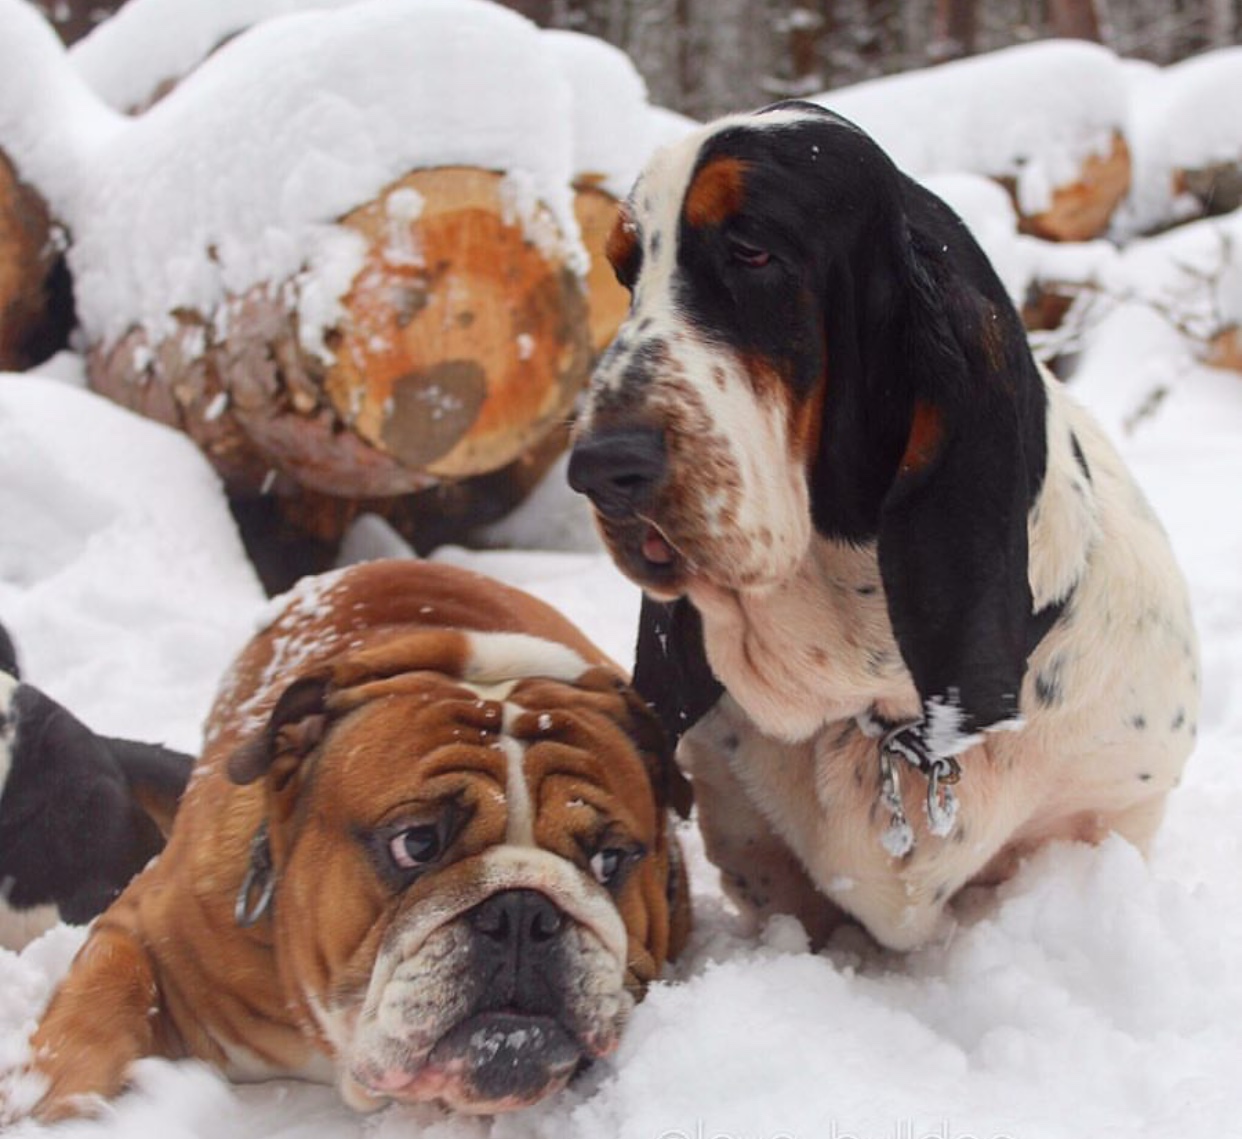 A Basset Hound sitting in snow next to an English Bulldog